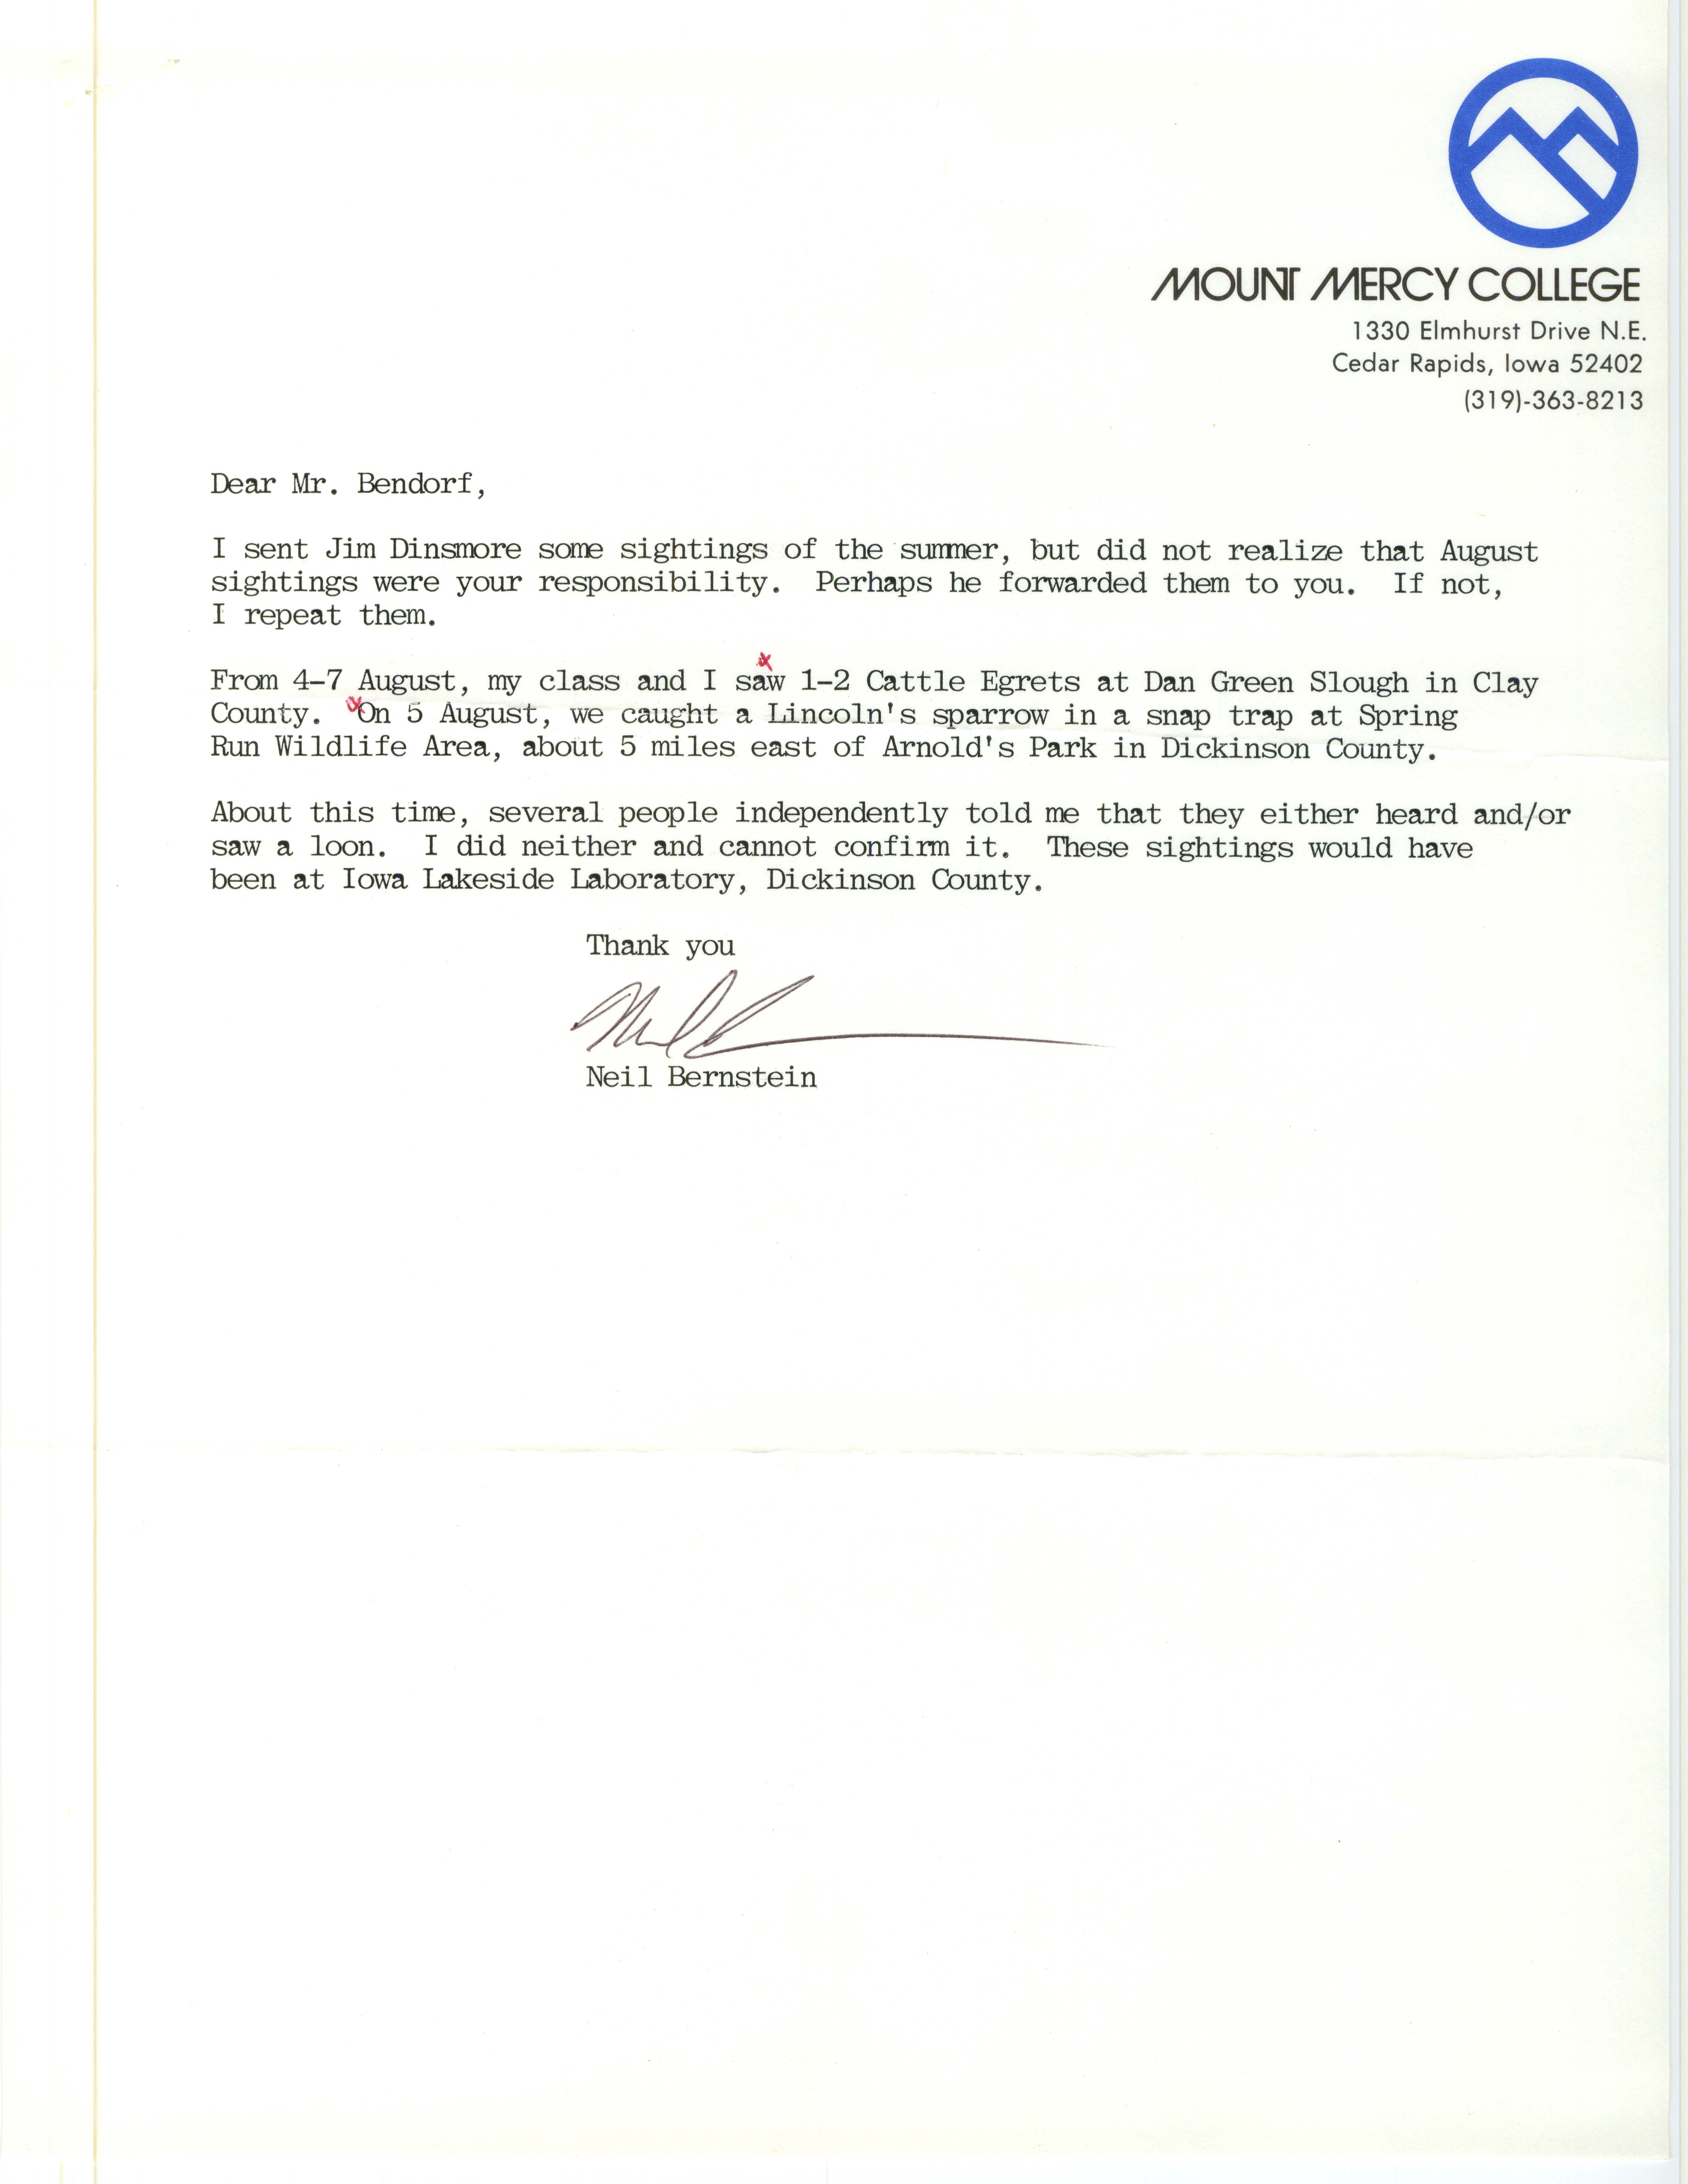 Neil Bernstein letter to Carl J. Bendorf regarding August bird sightings, fall 1987